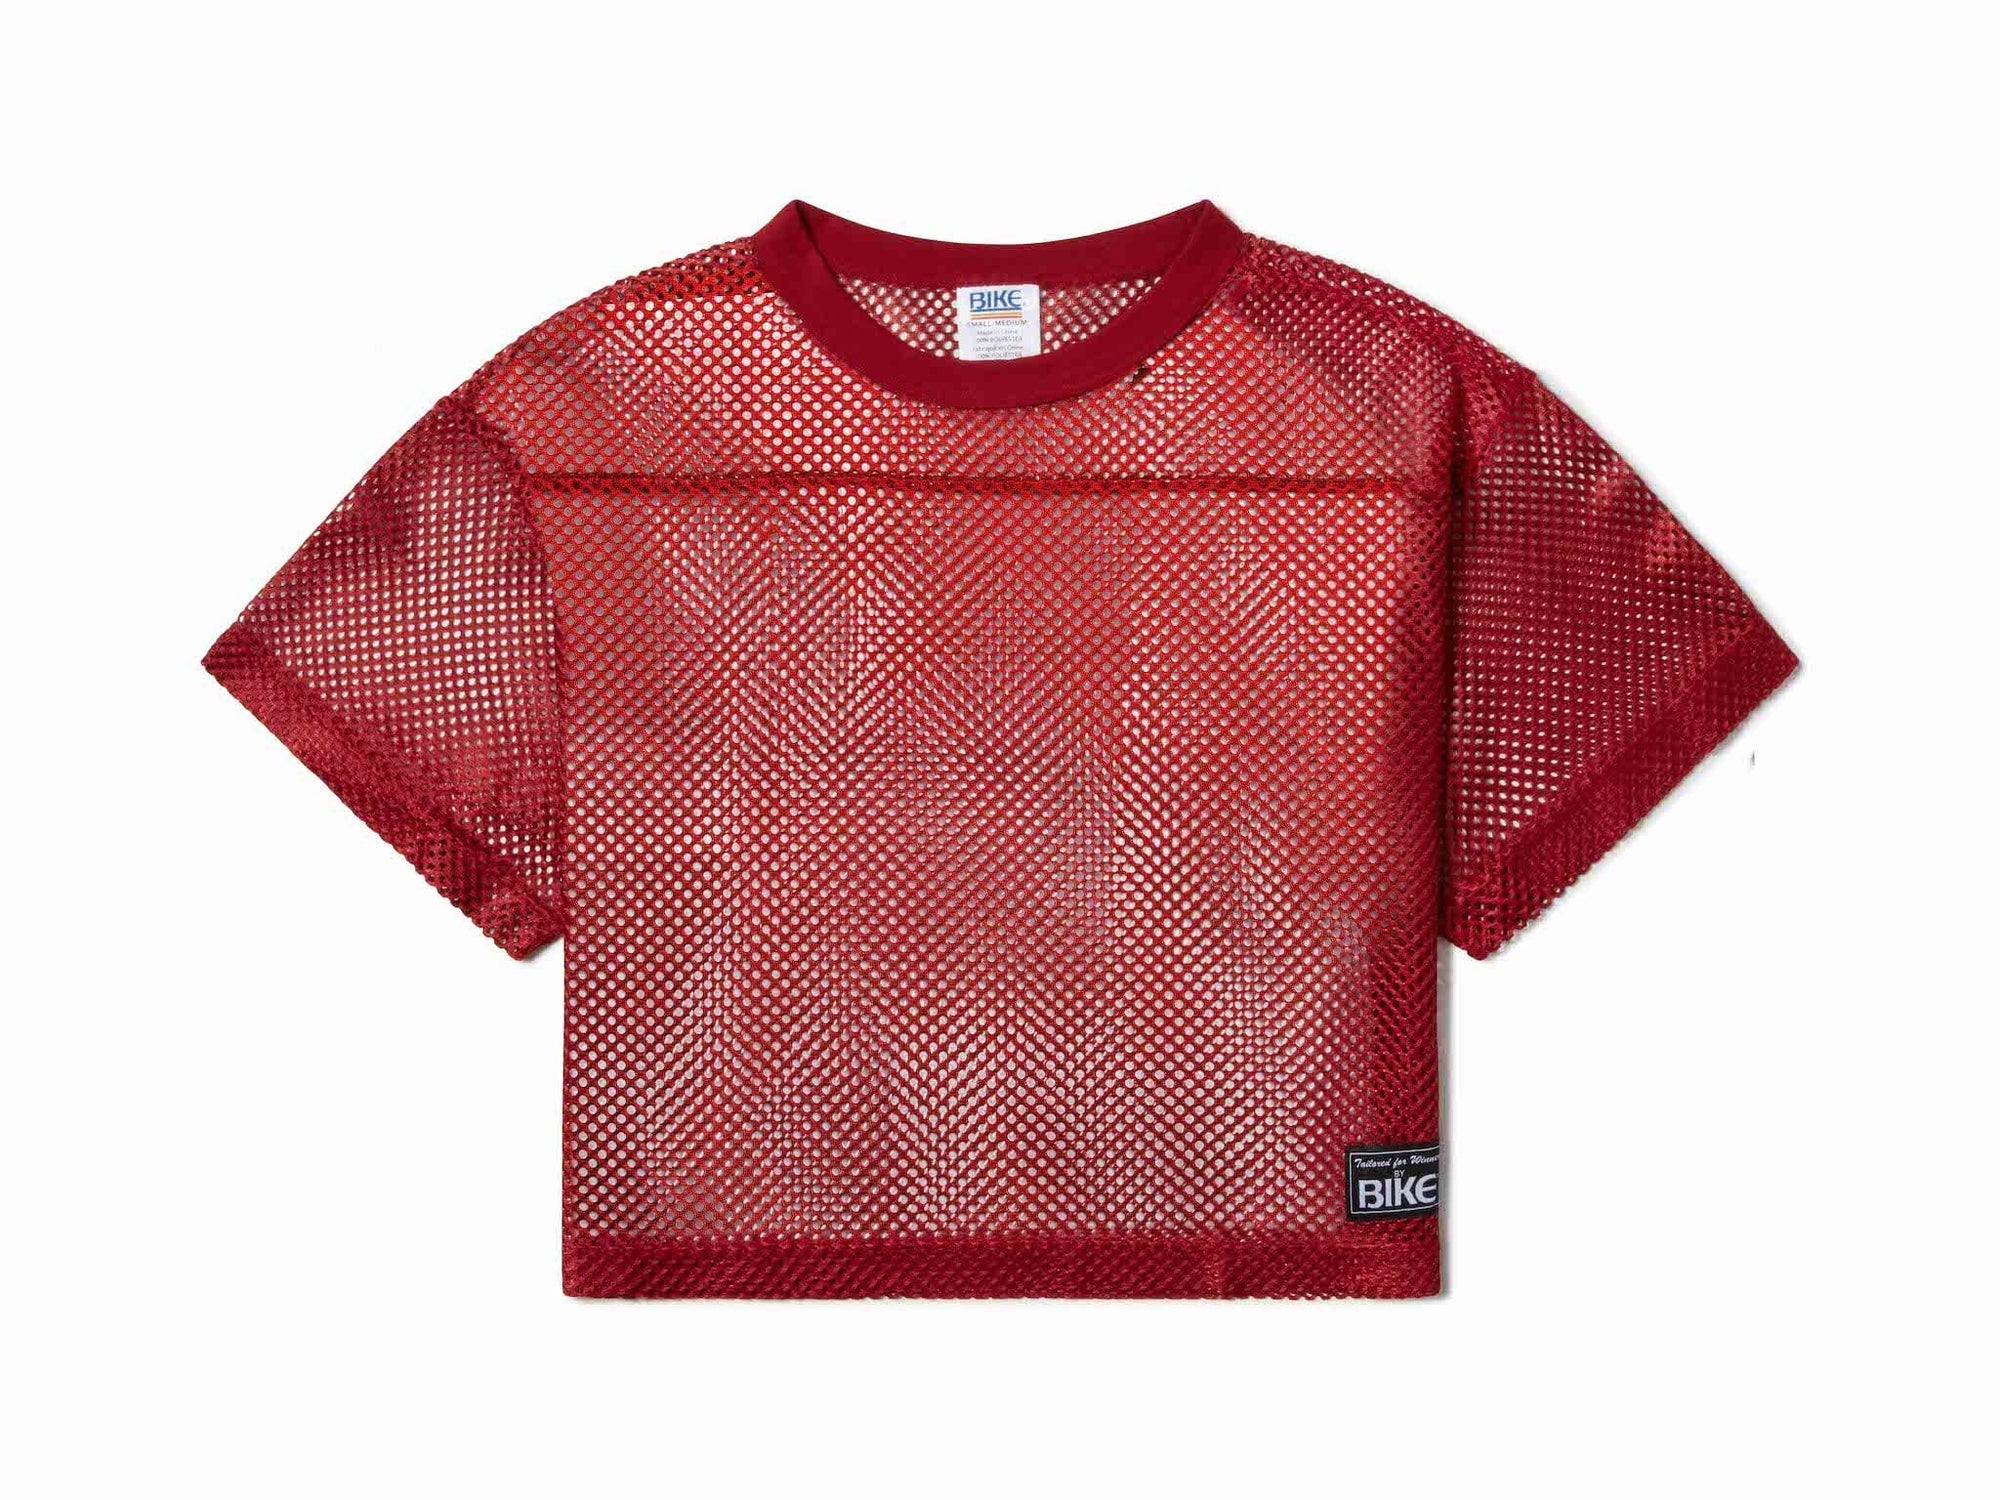 red BIKE® mesh shirt